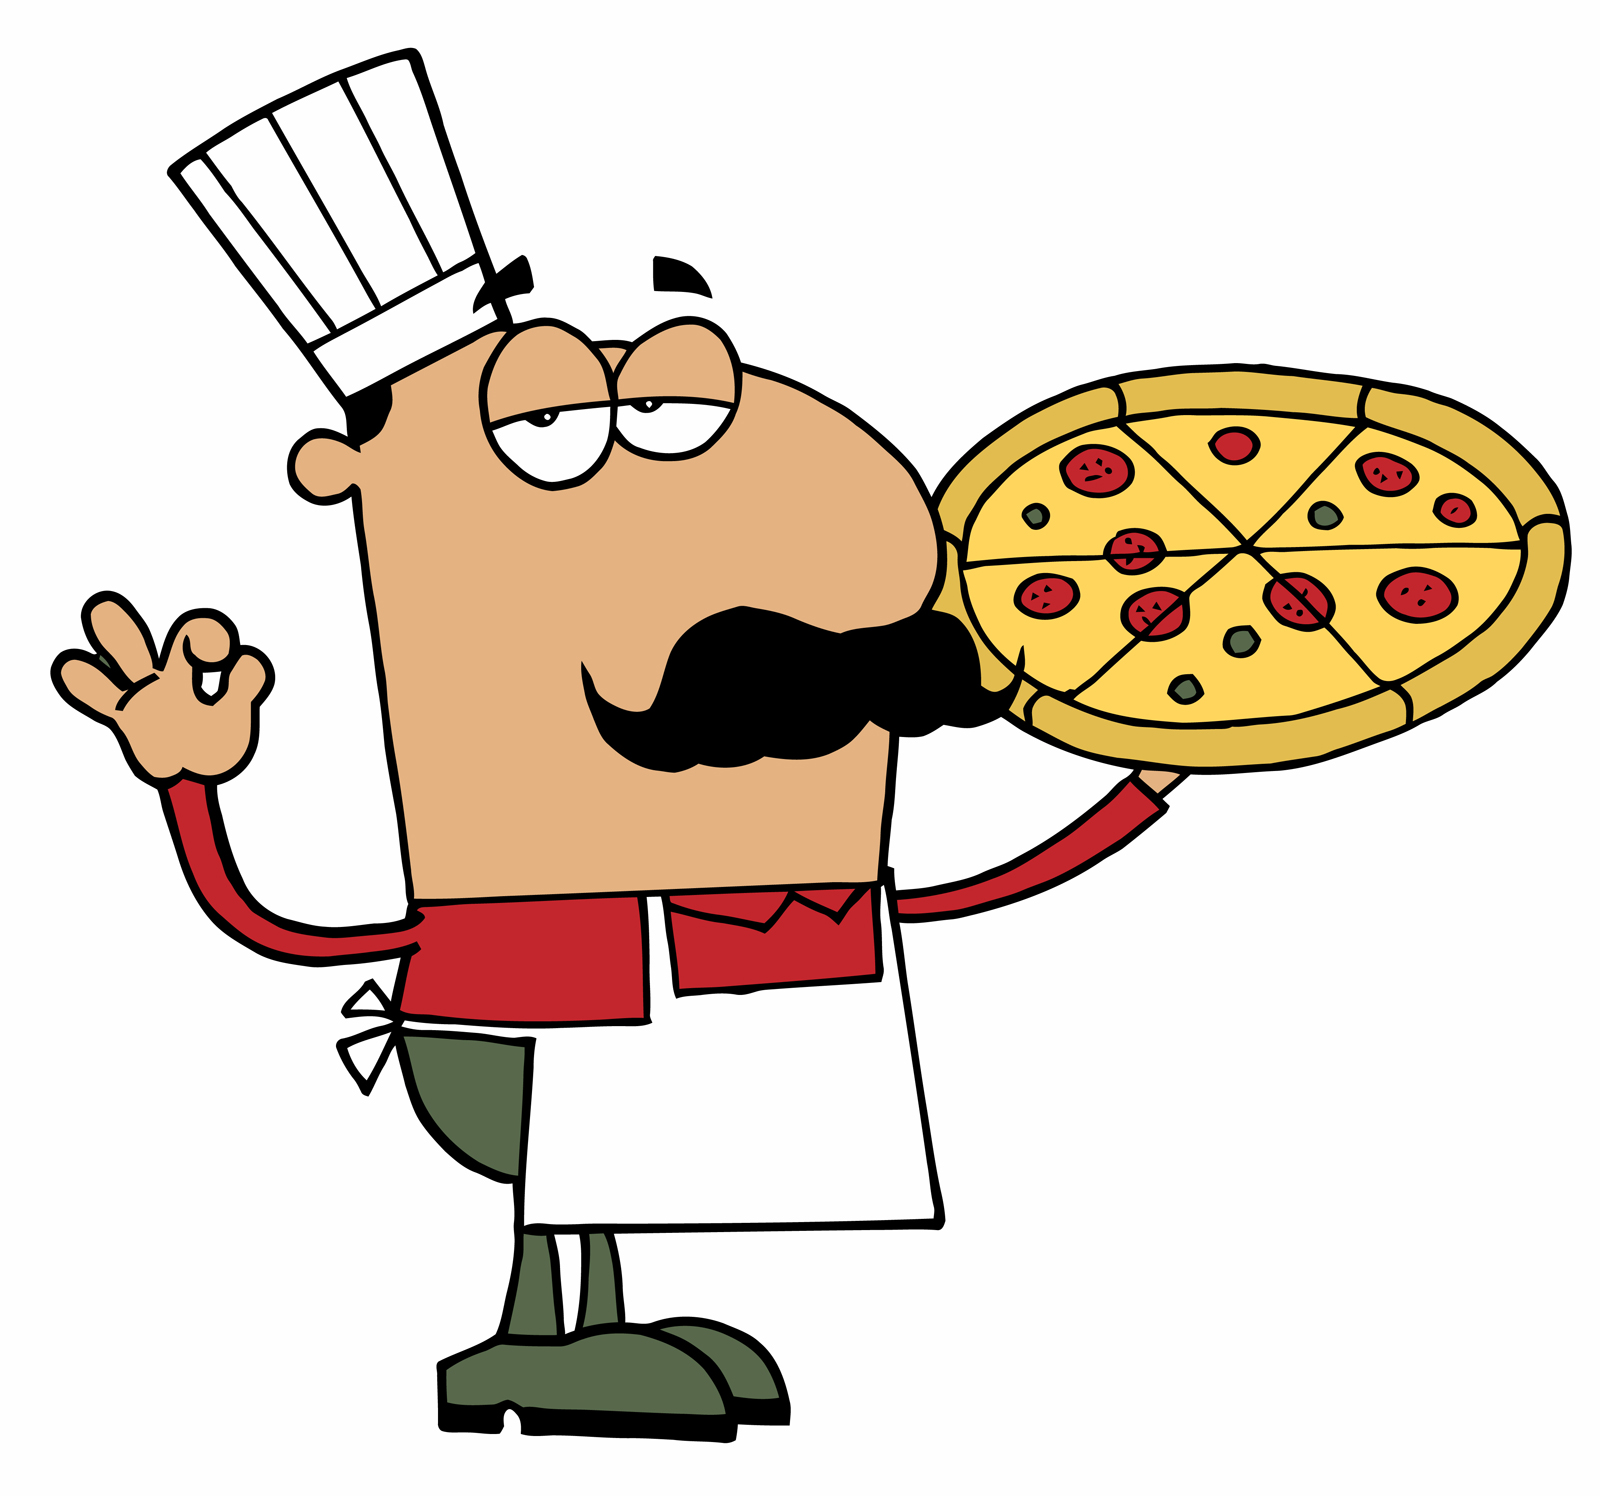 Pizza Hut Logo Clipart